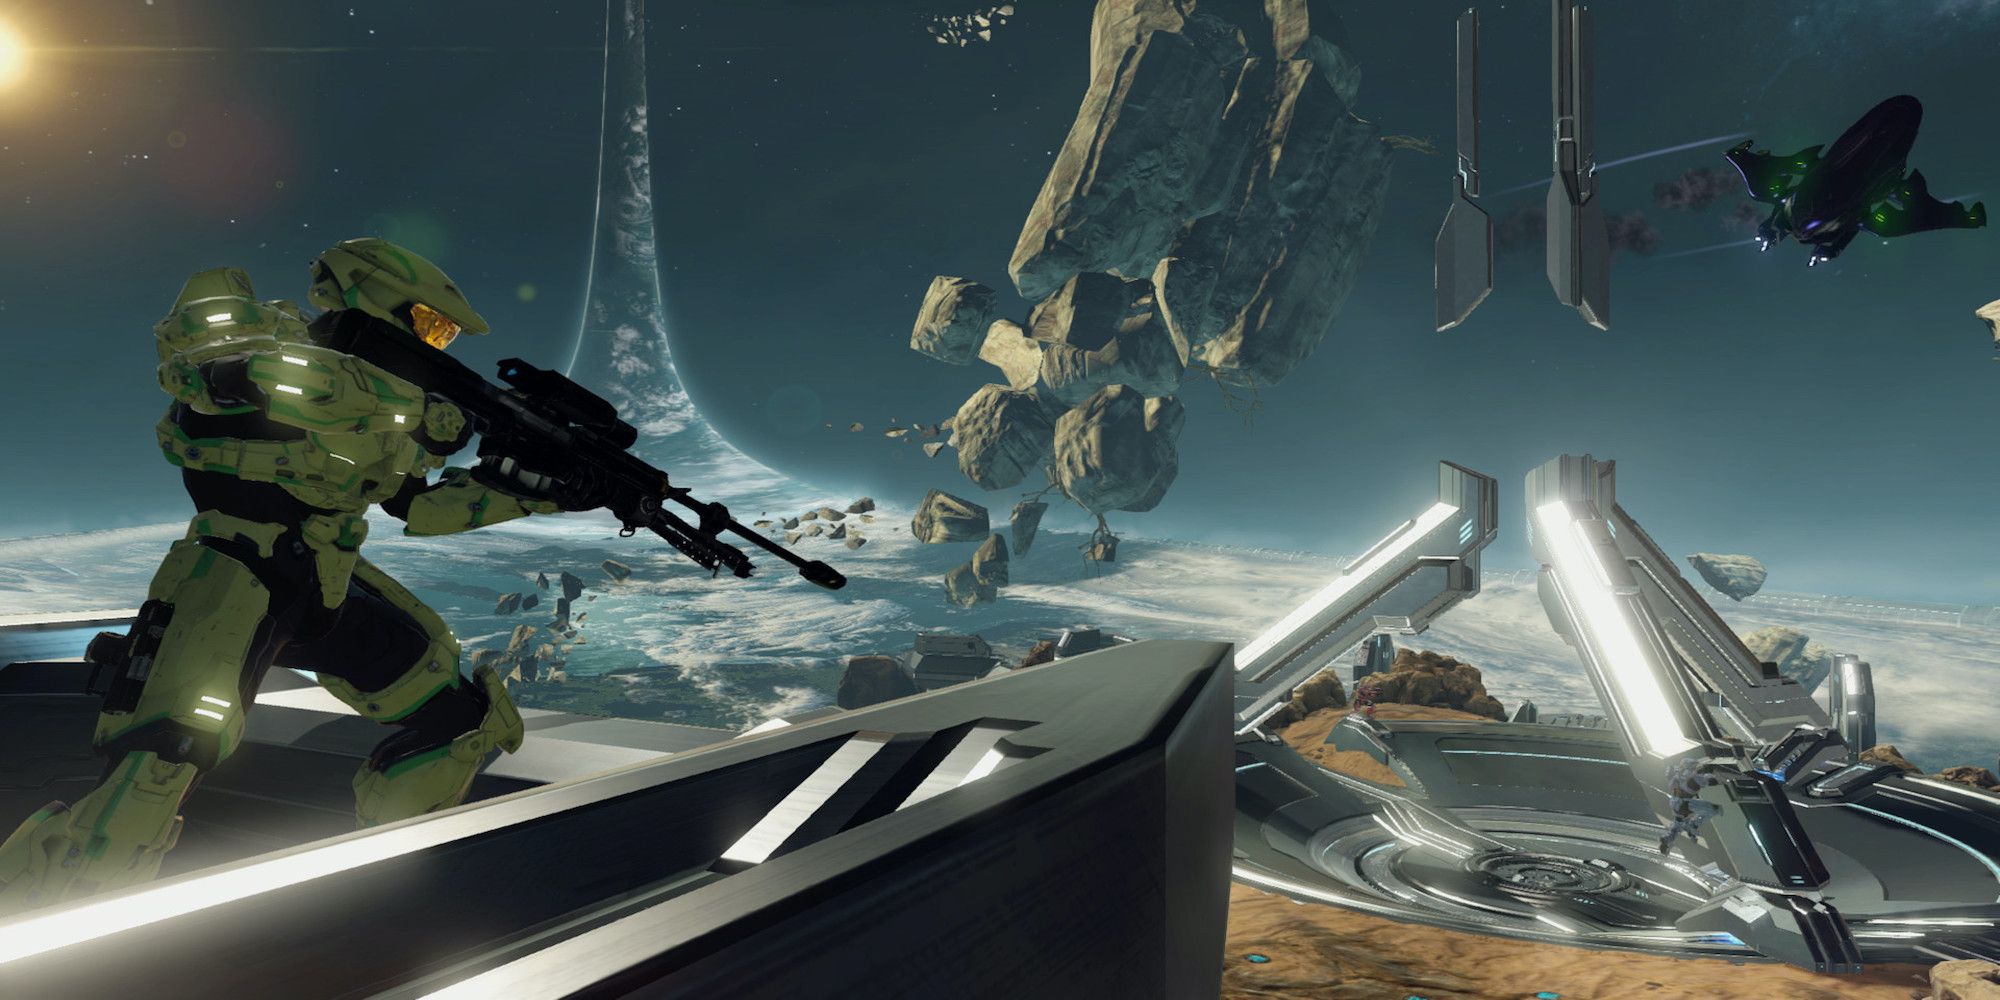 Screengrab from Halo 2